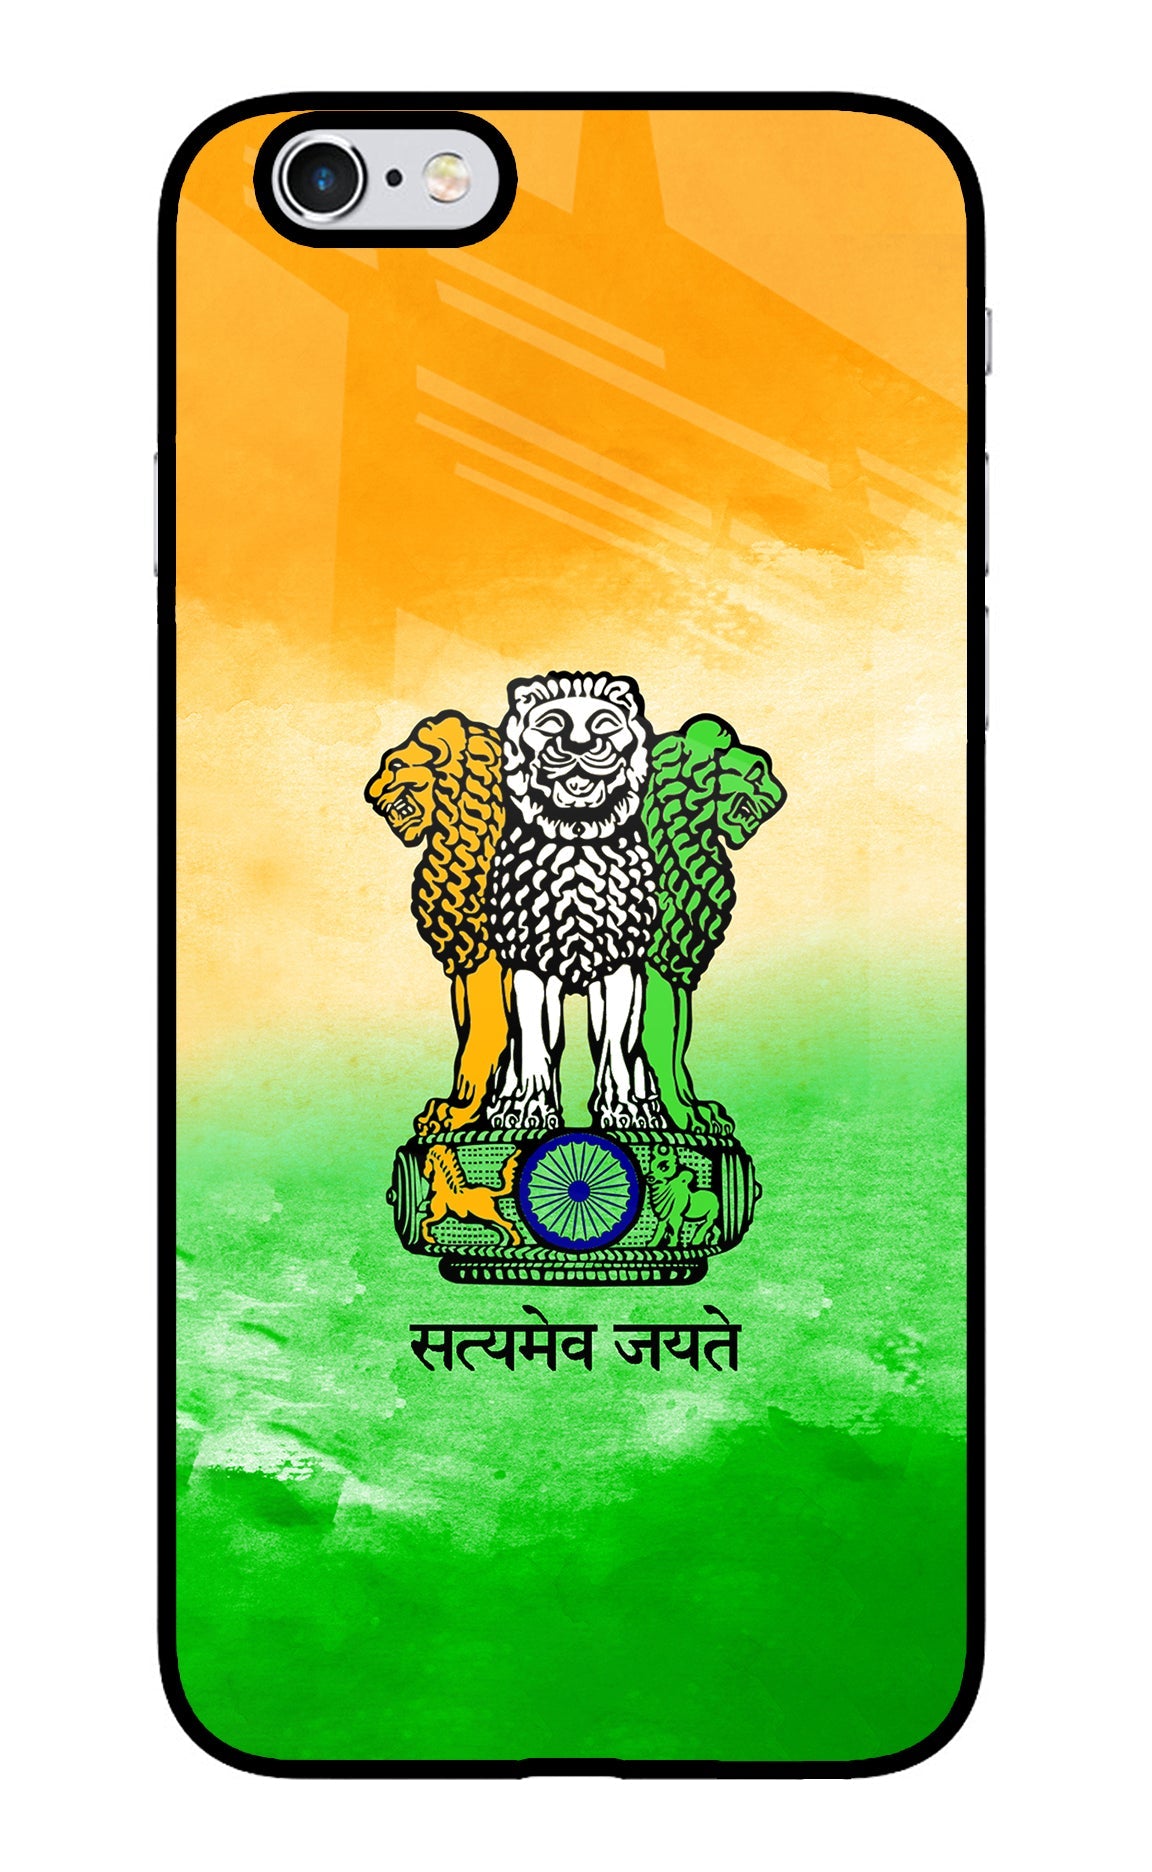 Satyamev Jayate Flag iPhone 6/6s Glass Case